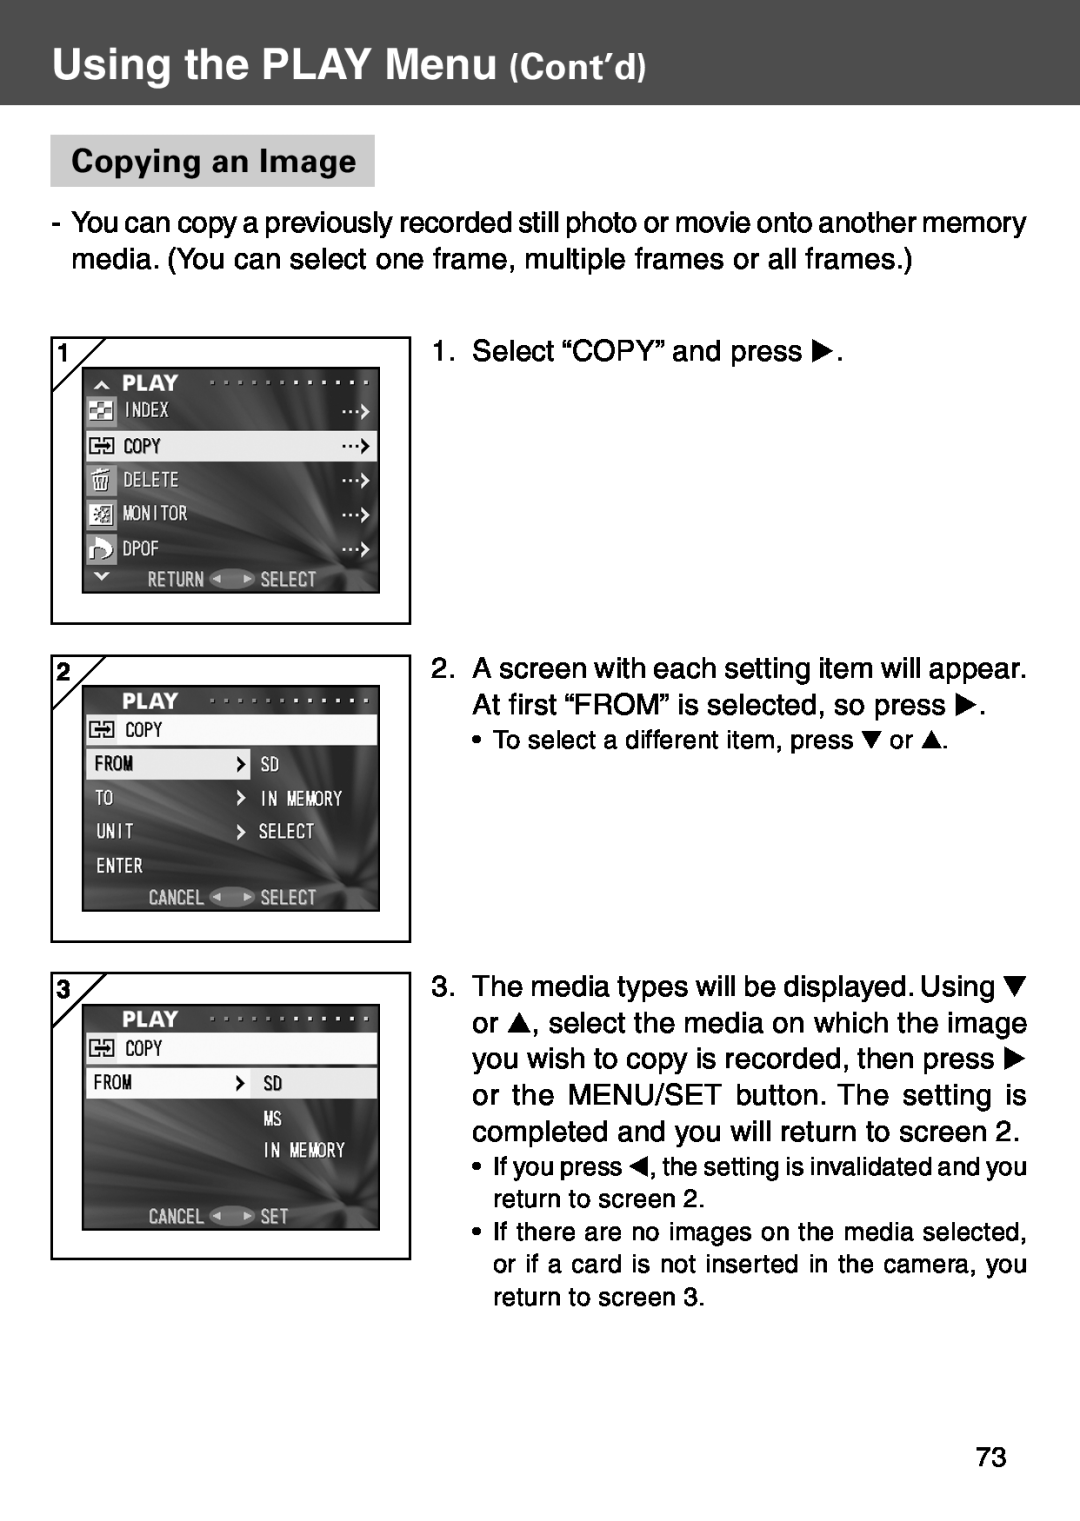 Konica Minolta KD-500Z user manual Copying an Image, Using the PLAY Menu Cont’d 